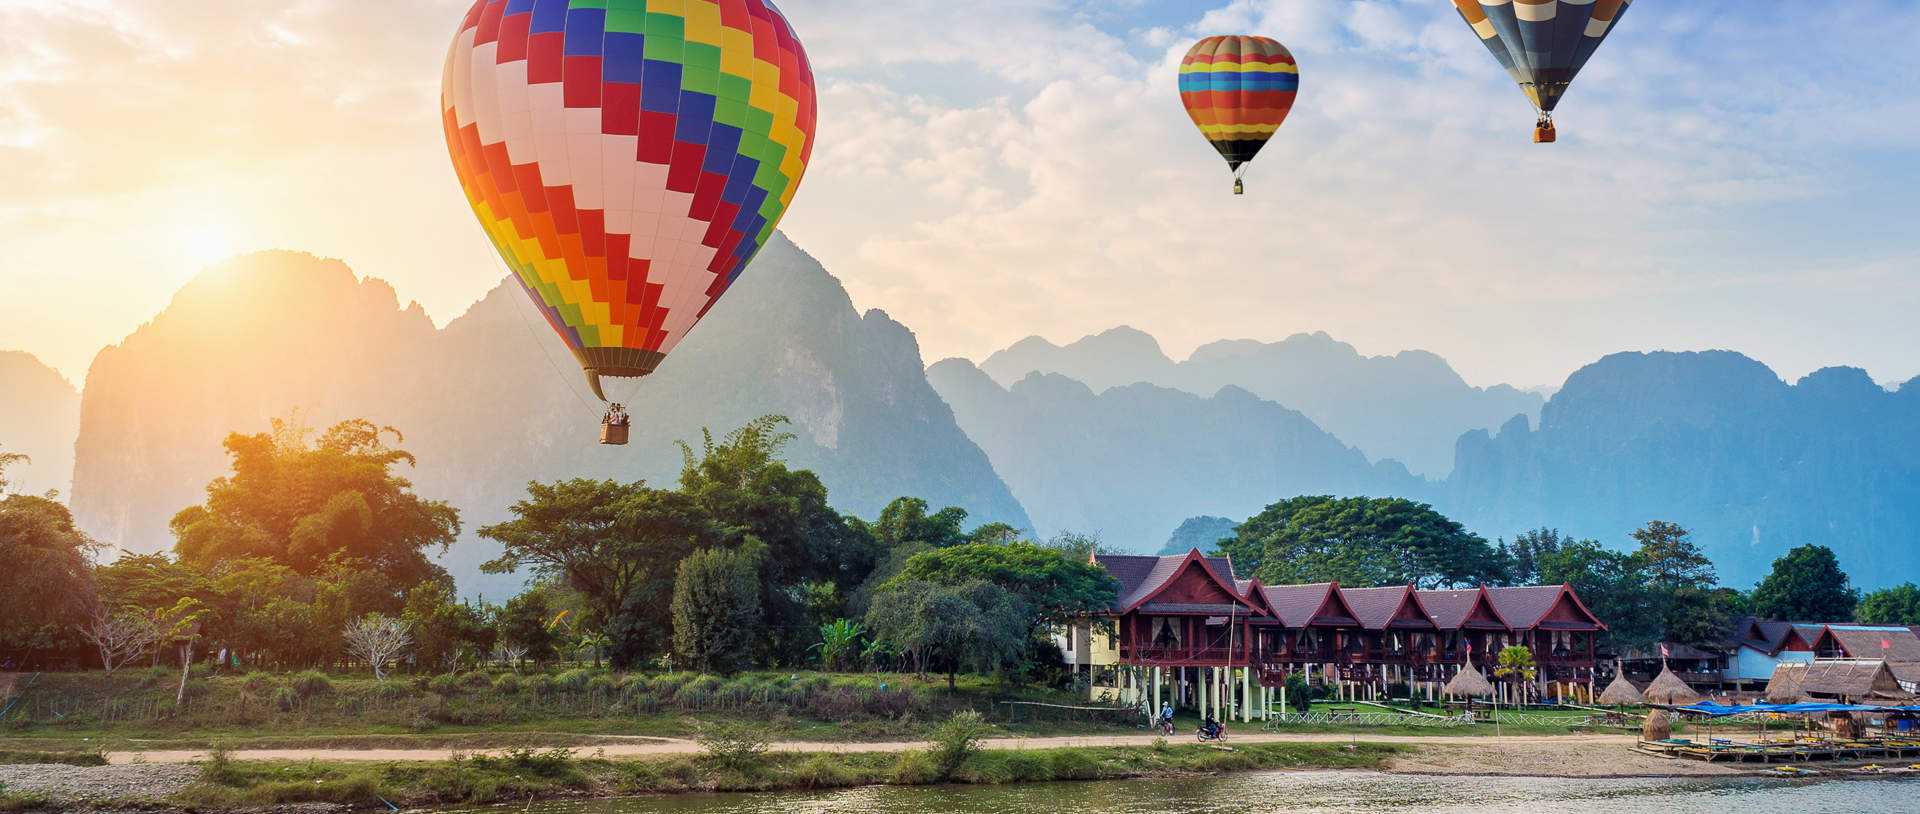 Hot Air Balloons Over Nam Song River Laos